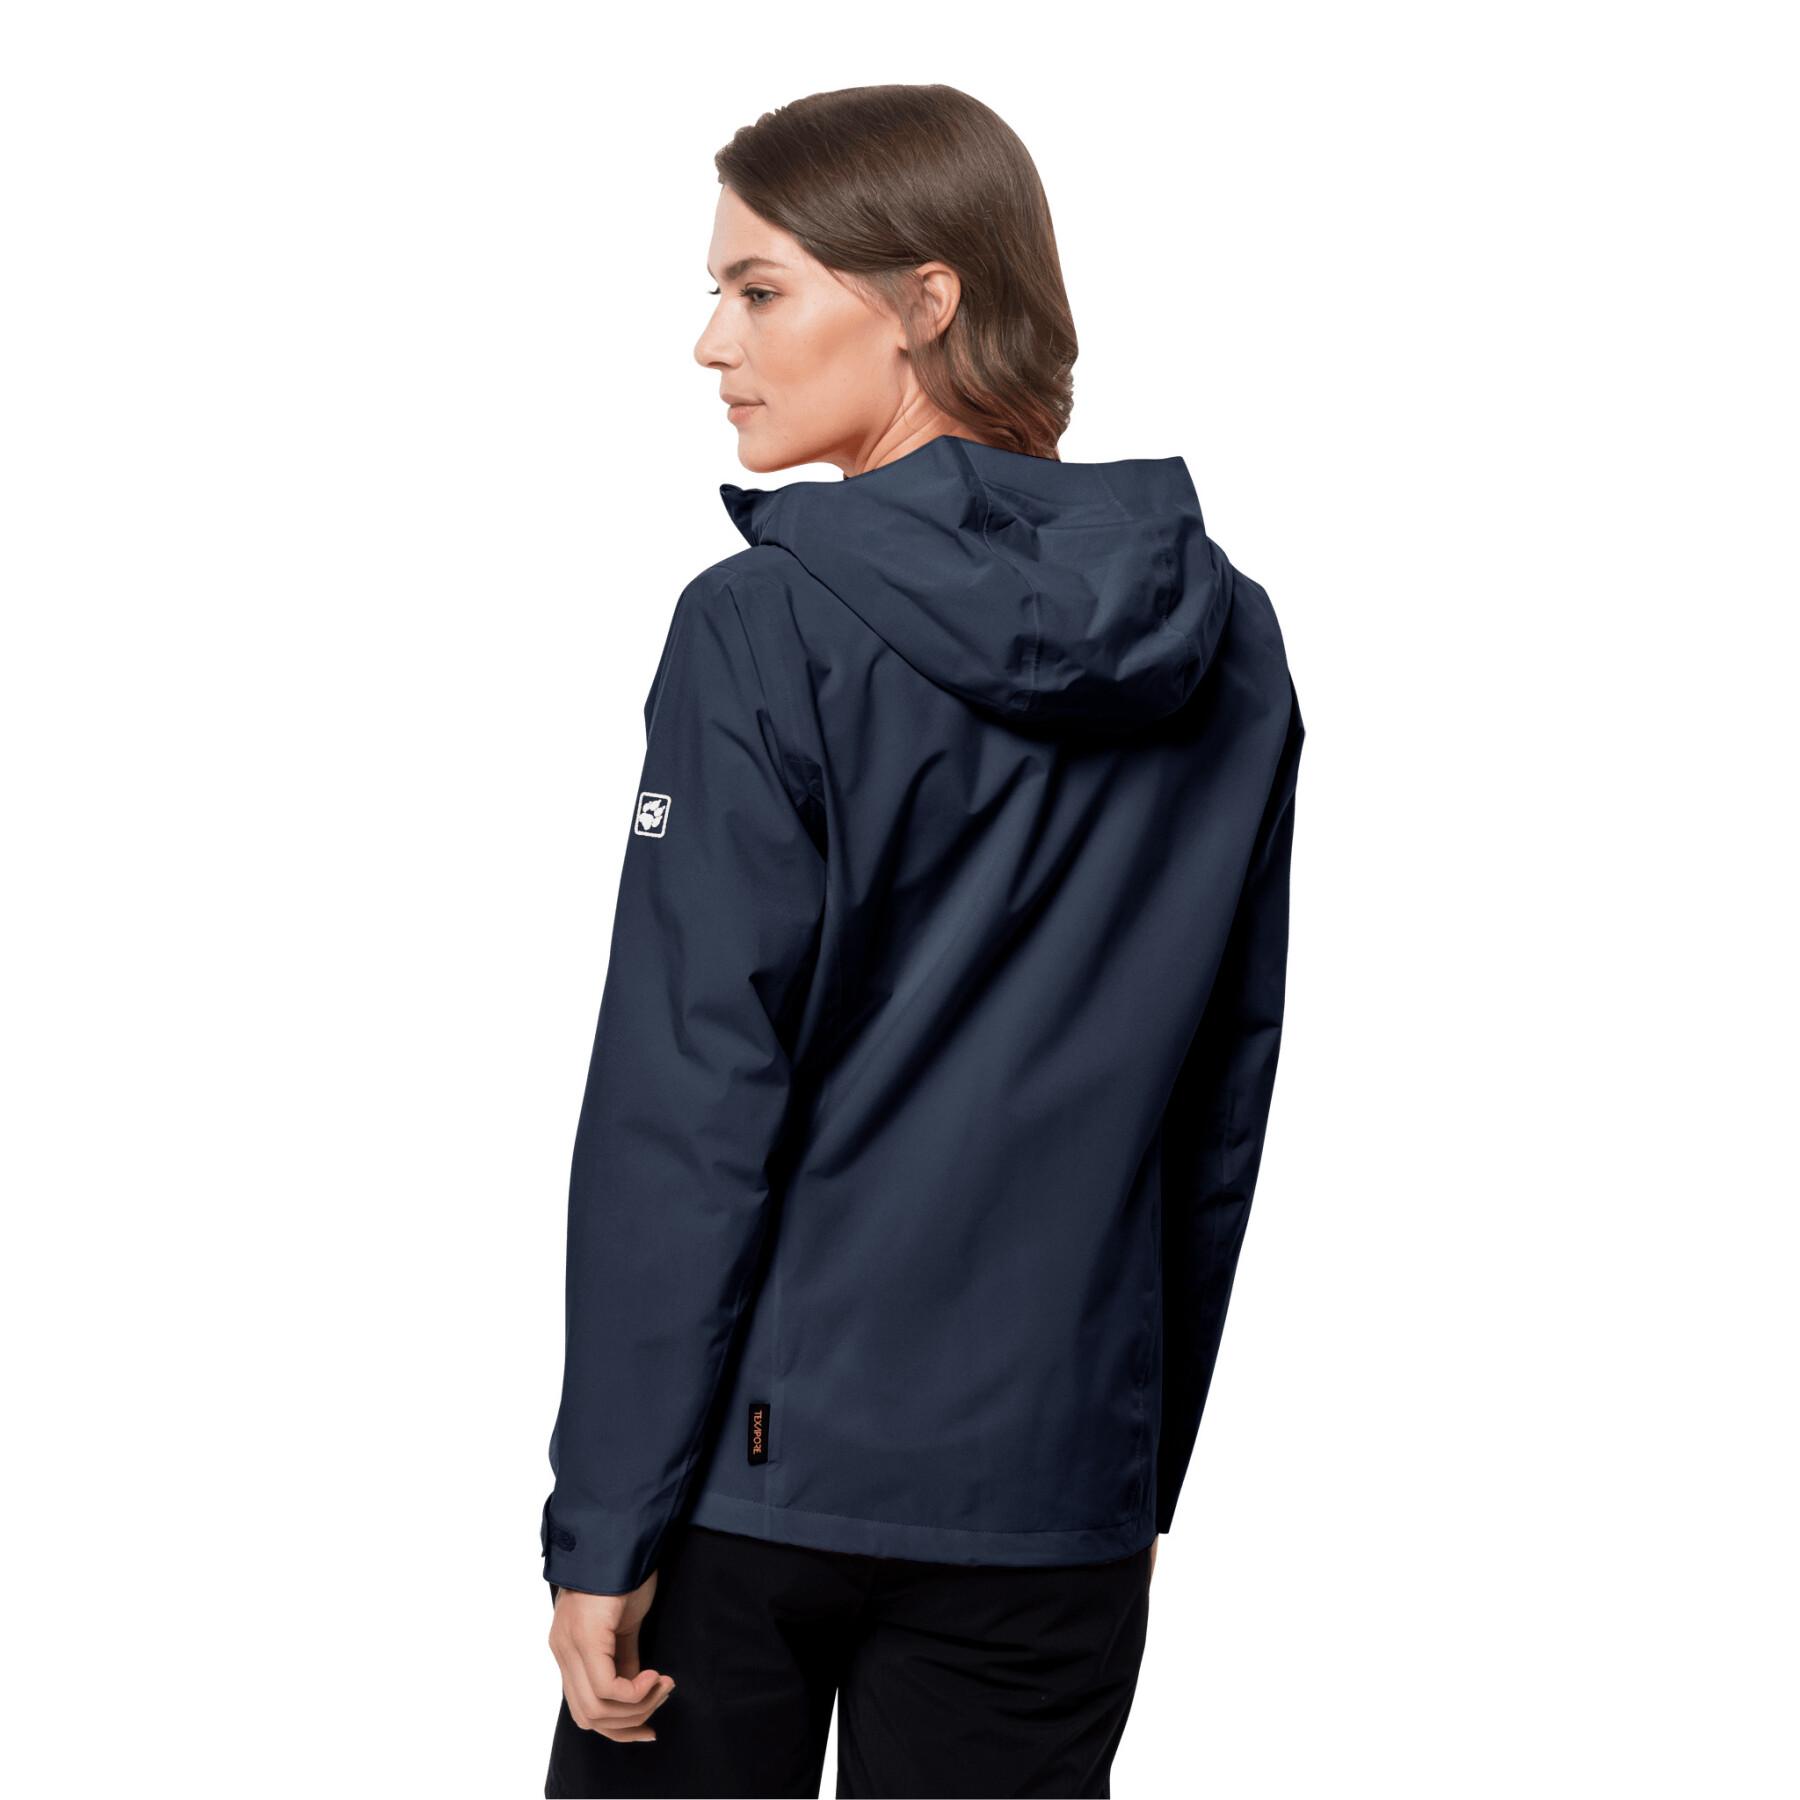 Waterproof jacket large size woman Jack Wolfskin Pack & Go shell